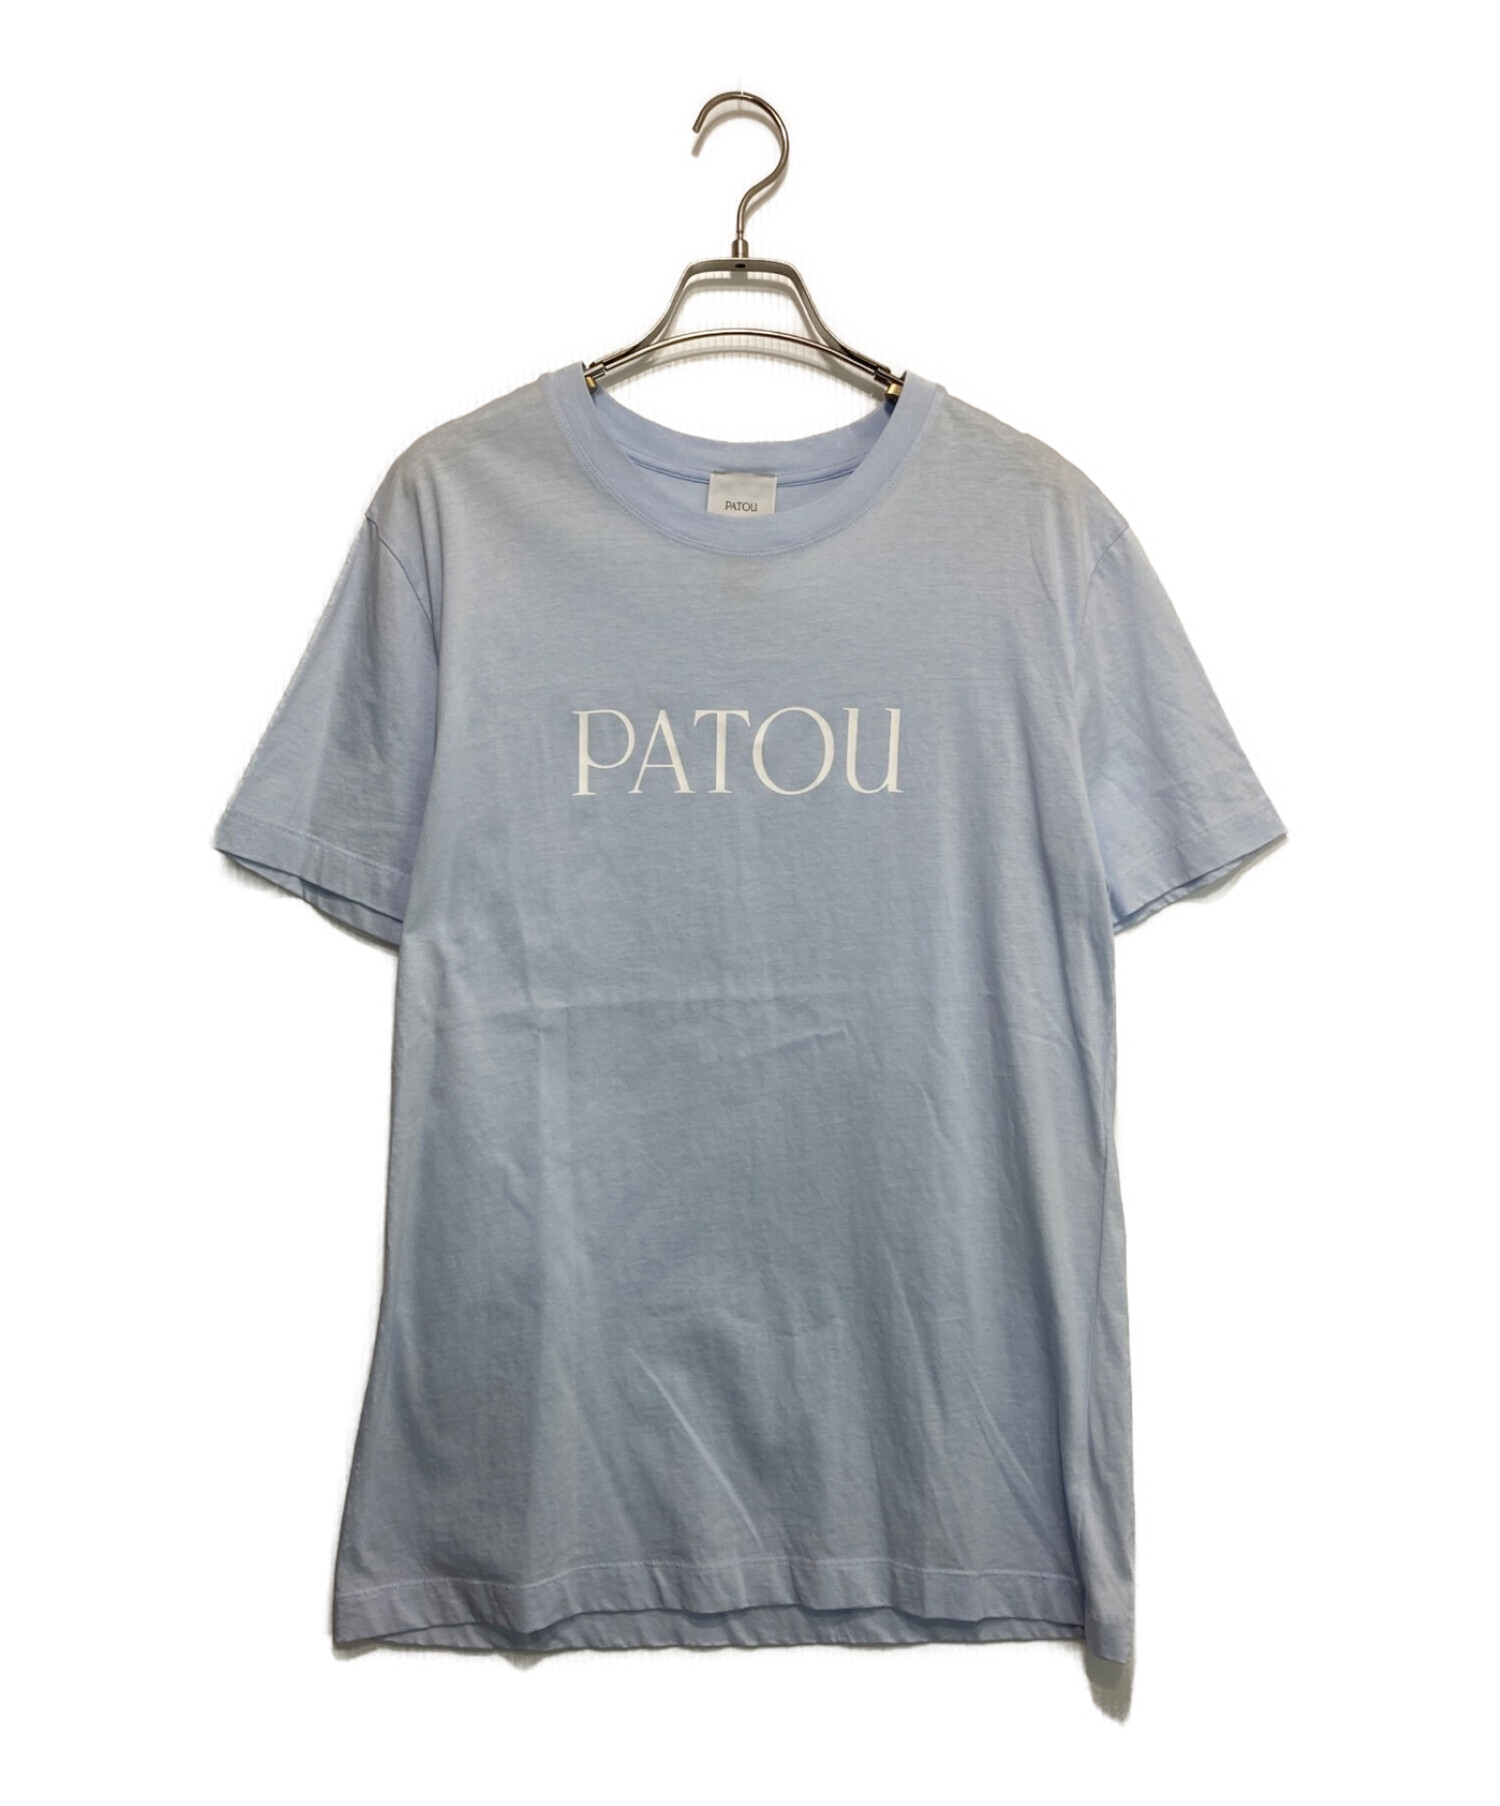 Patou (パトゥ) ESSENTIAL PATOU Tシャツ/オーガニックコットン パトゥロゴTシャツ ブルー サイズ:S